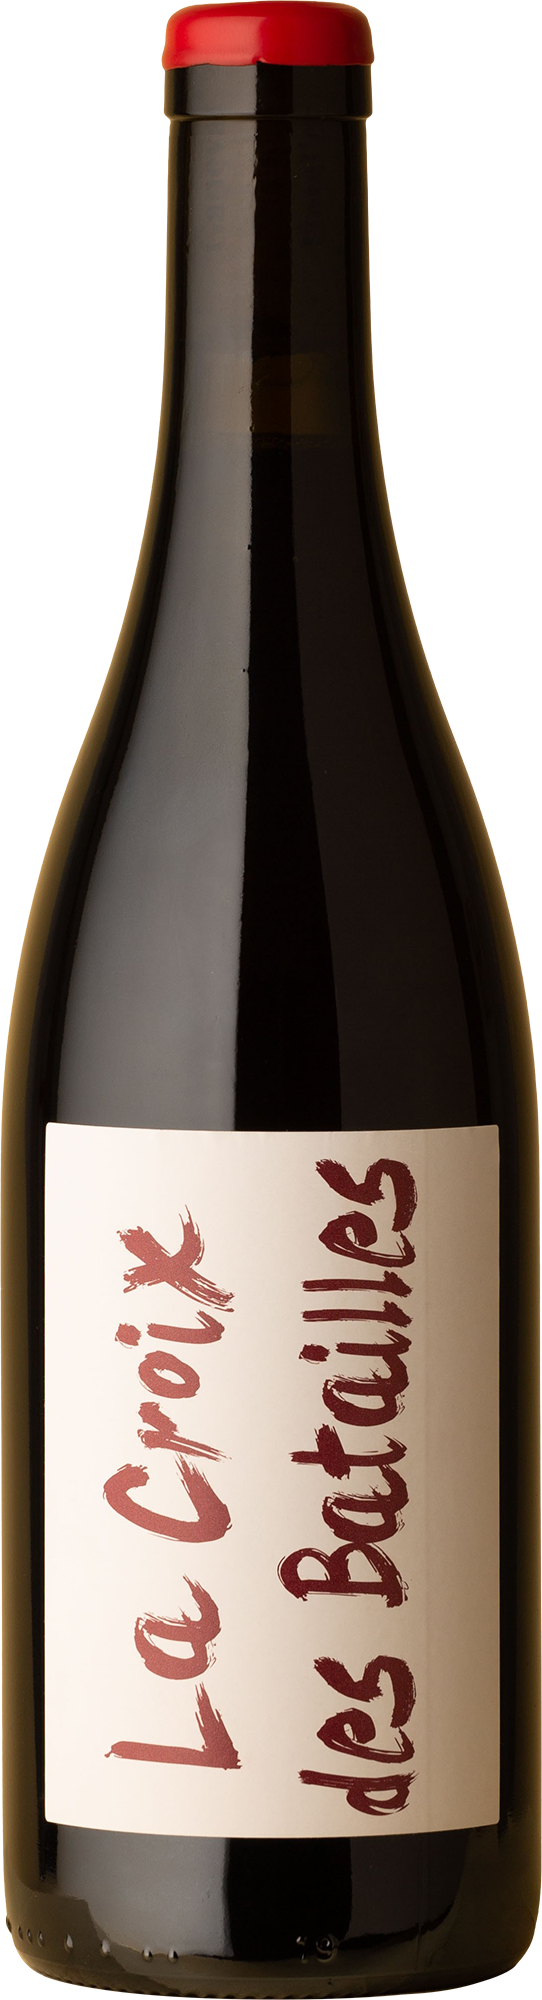 Anne & Jean-François Ganevat - La Croix des Batailles Gamay 2019 Red Wine